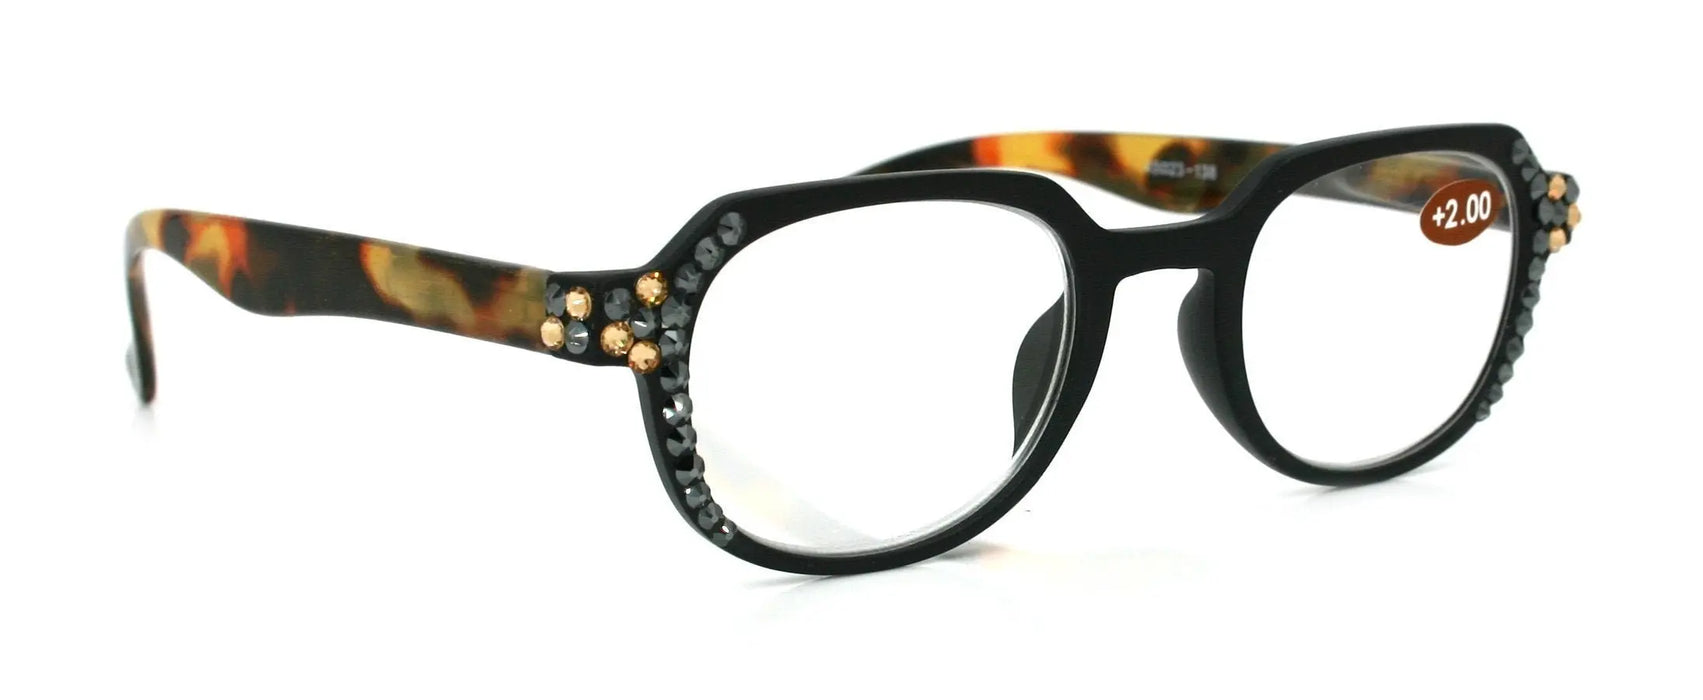 Eyeglasses - NY Fifth Avenue